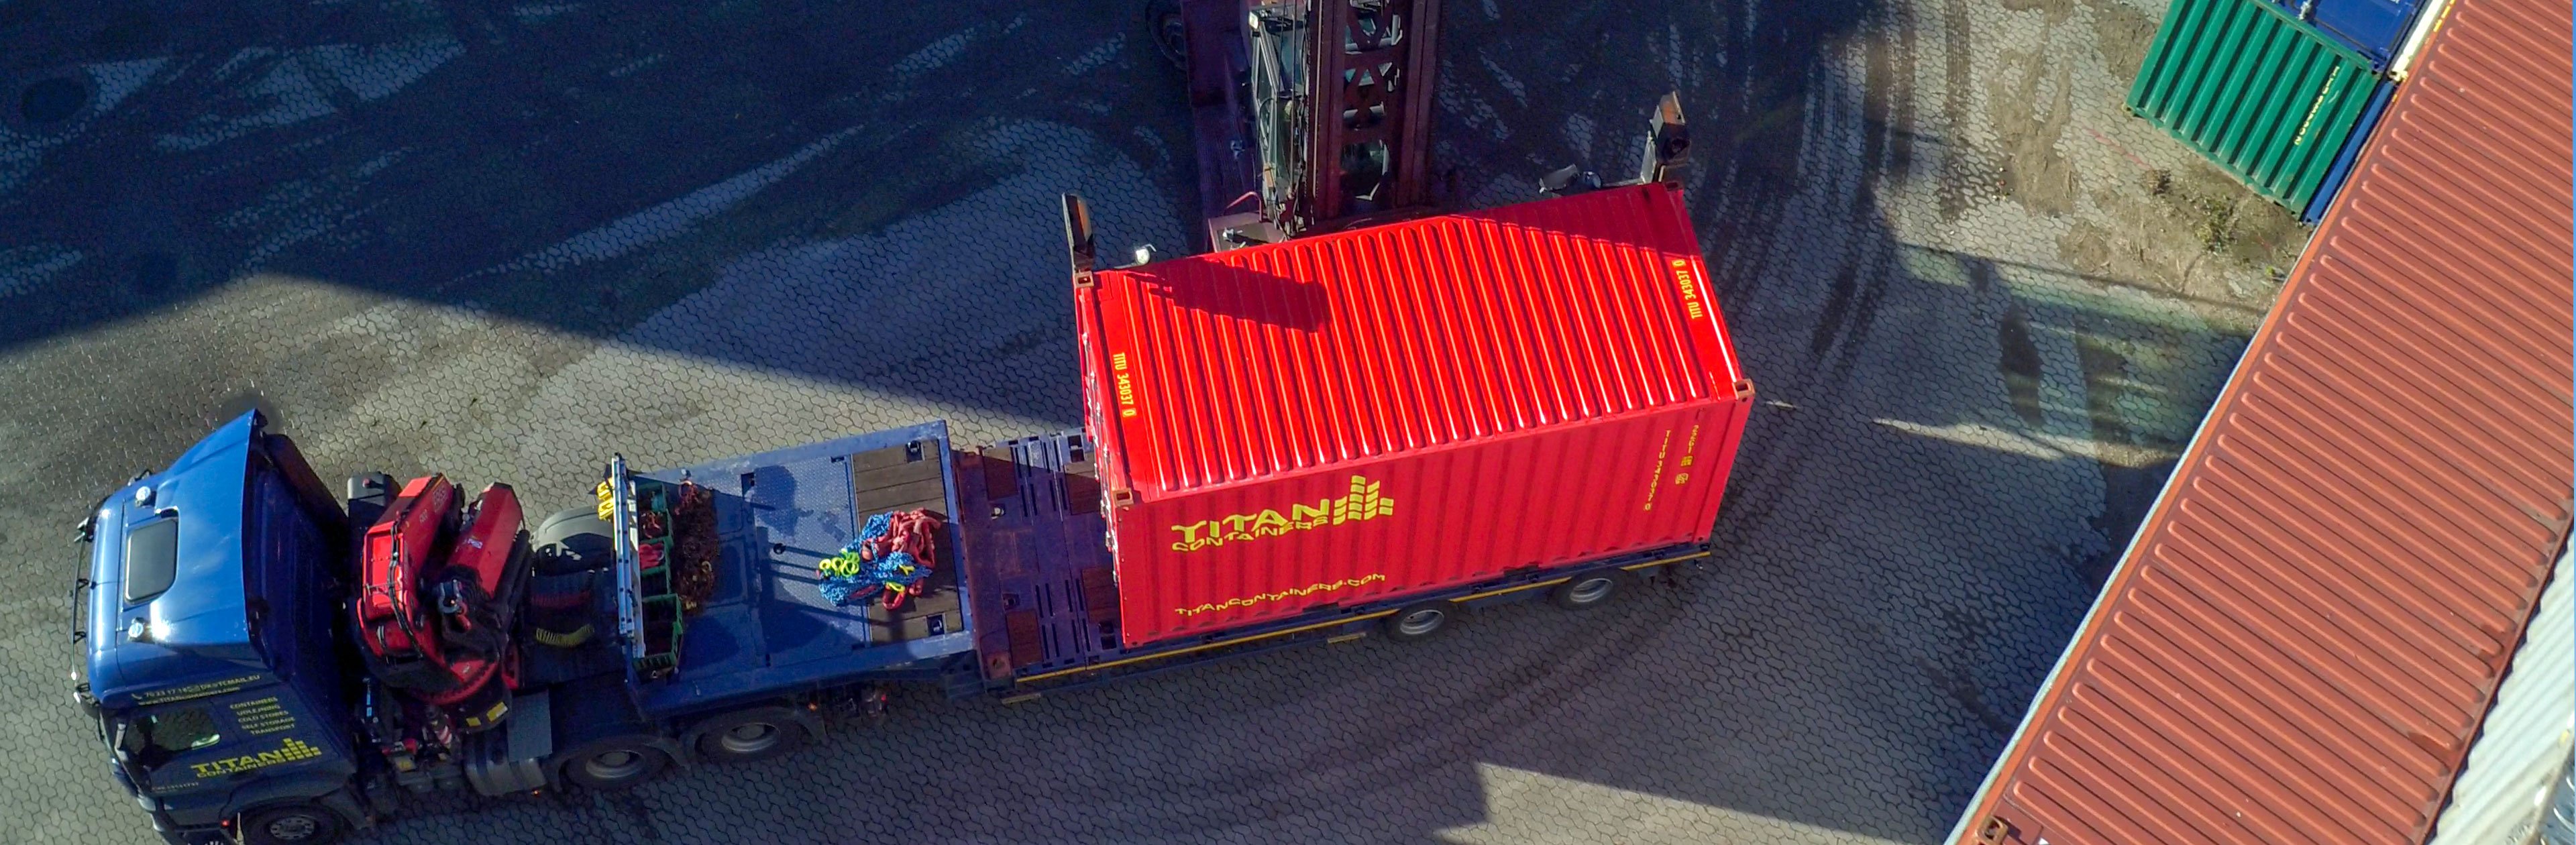 Container på lastbil